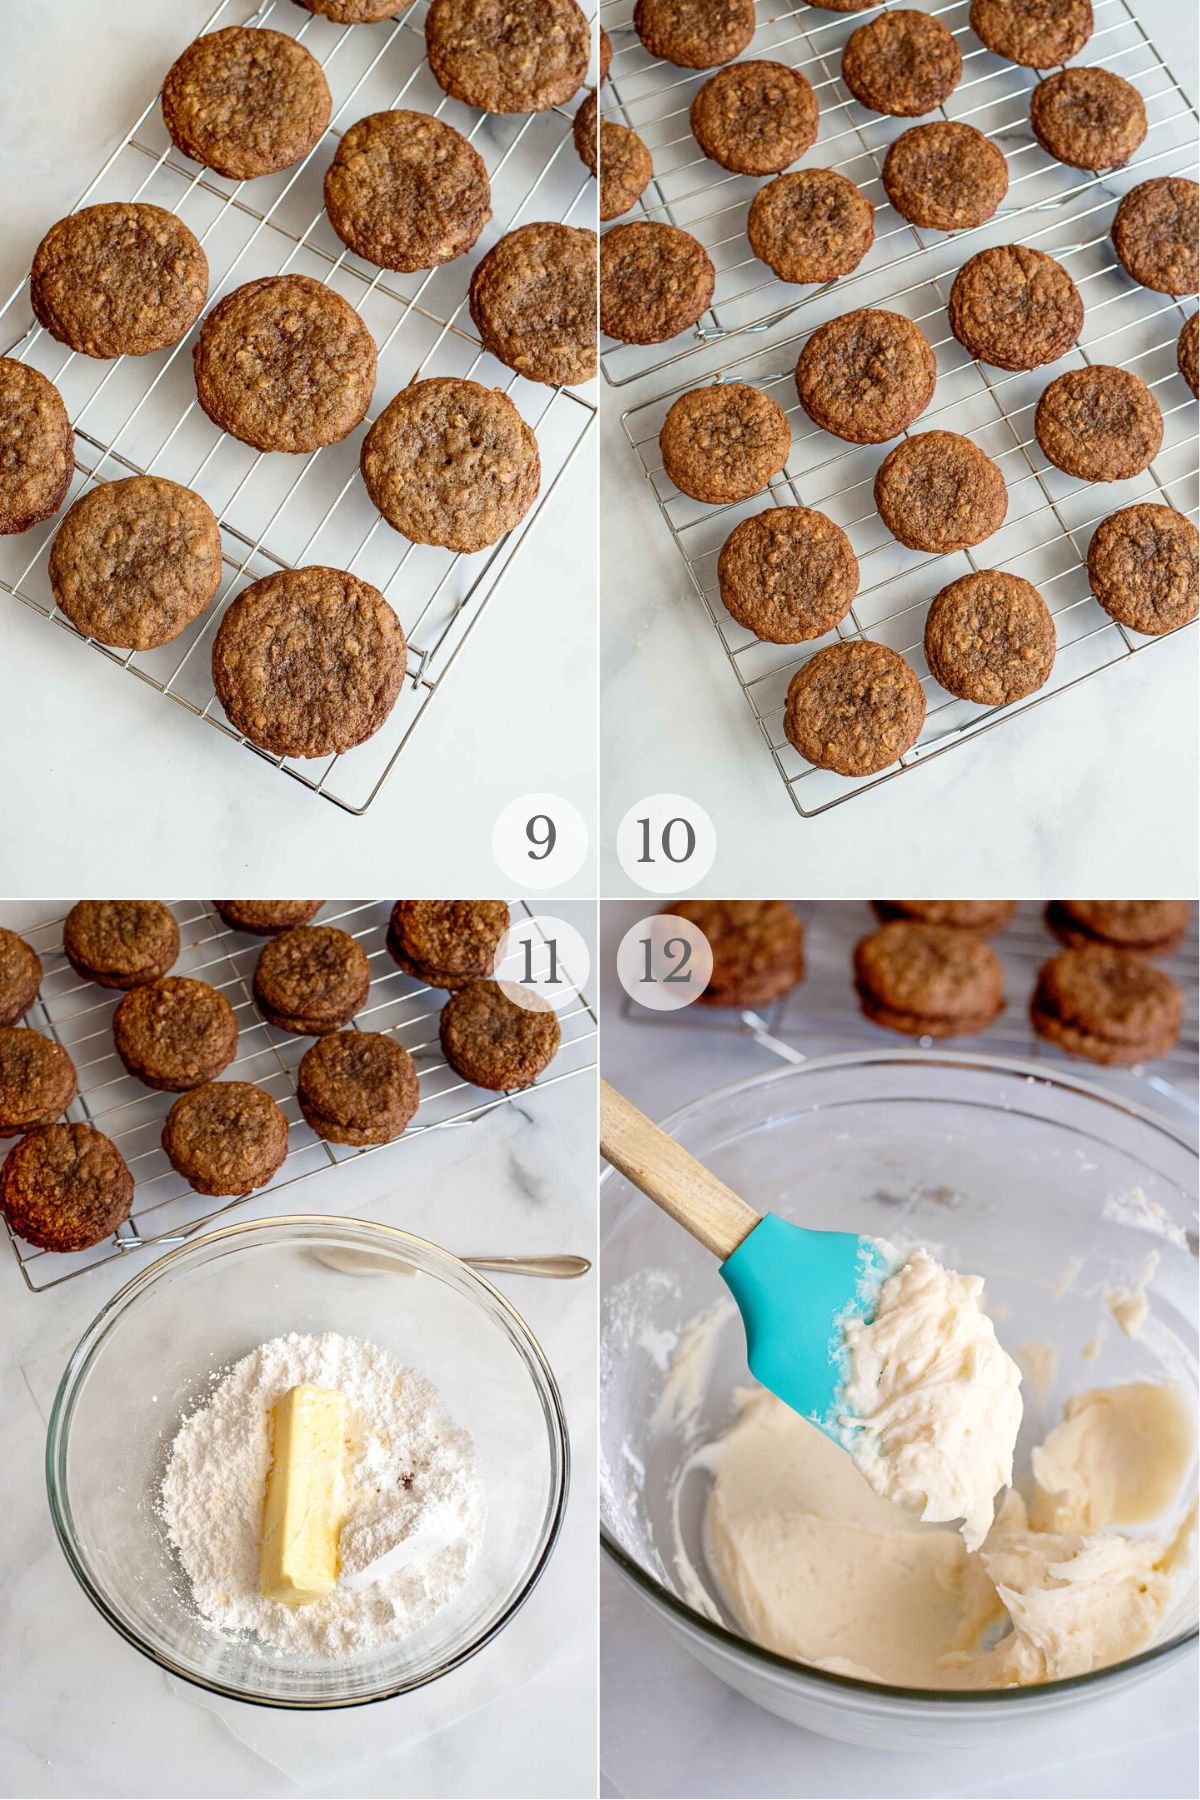 oatmeal cream pies recipe steps 9-12.